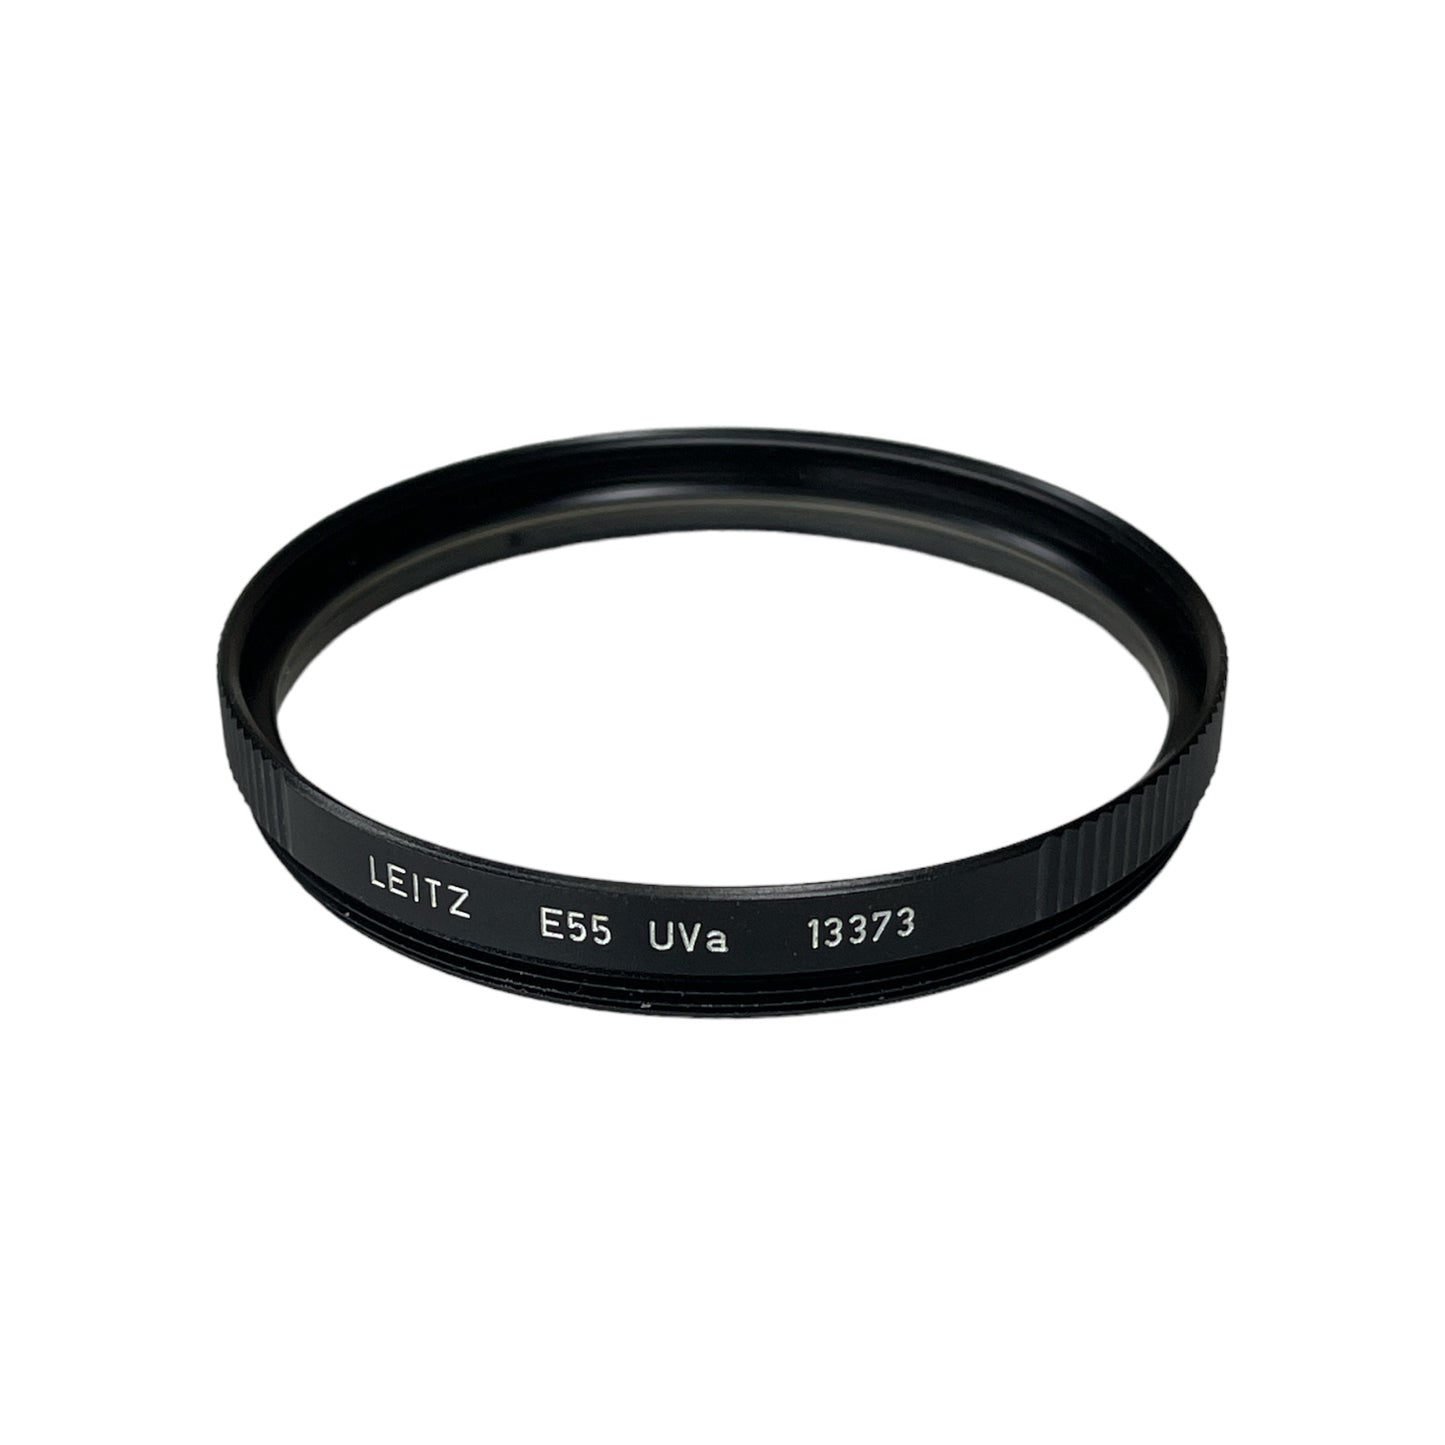 Leica E55 UVa Filter 13373